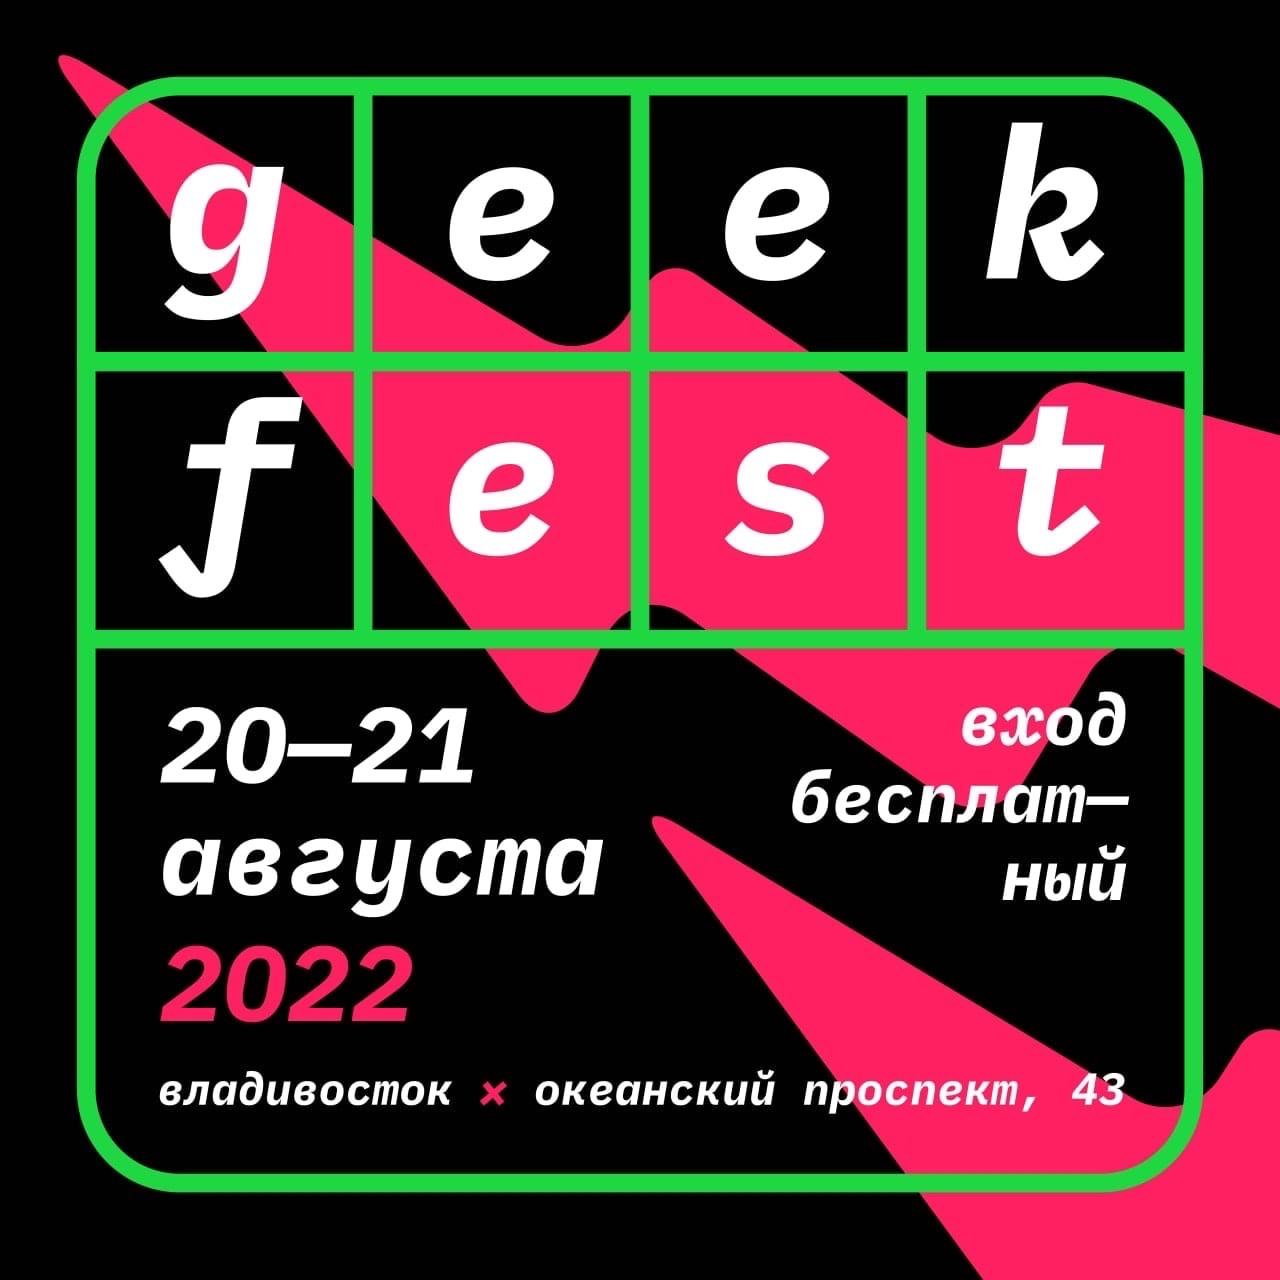 Geek Fest 2022